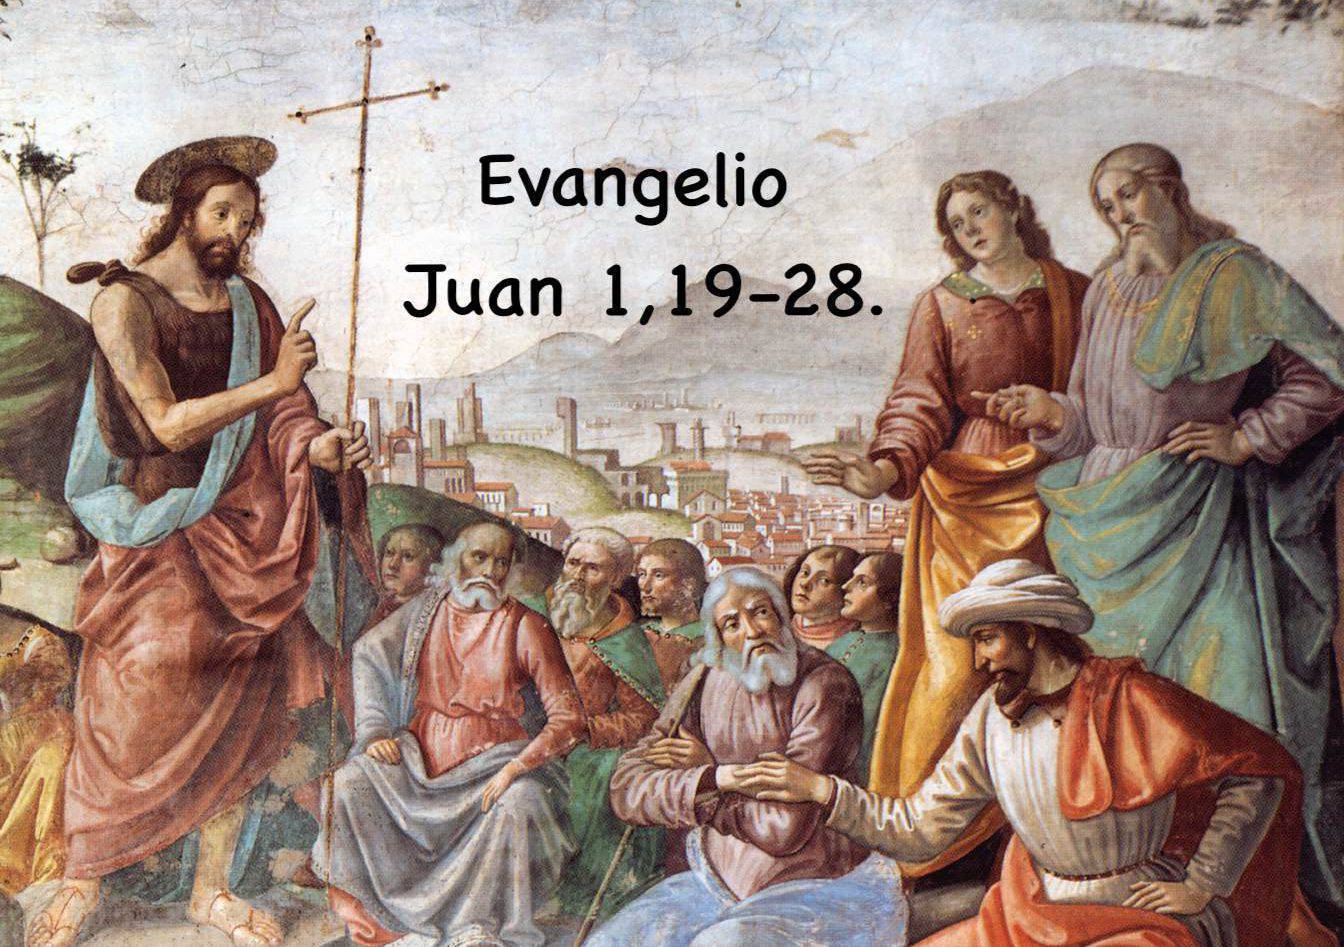 Evangelio según San Juan 1,19-28.